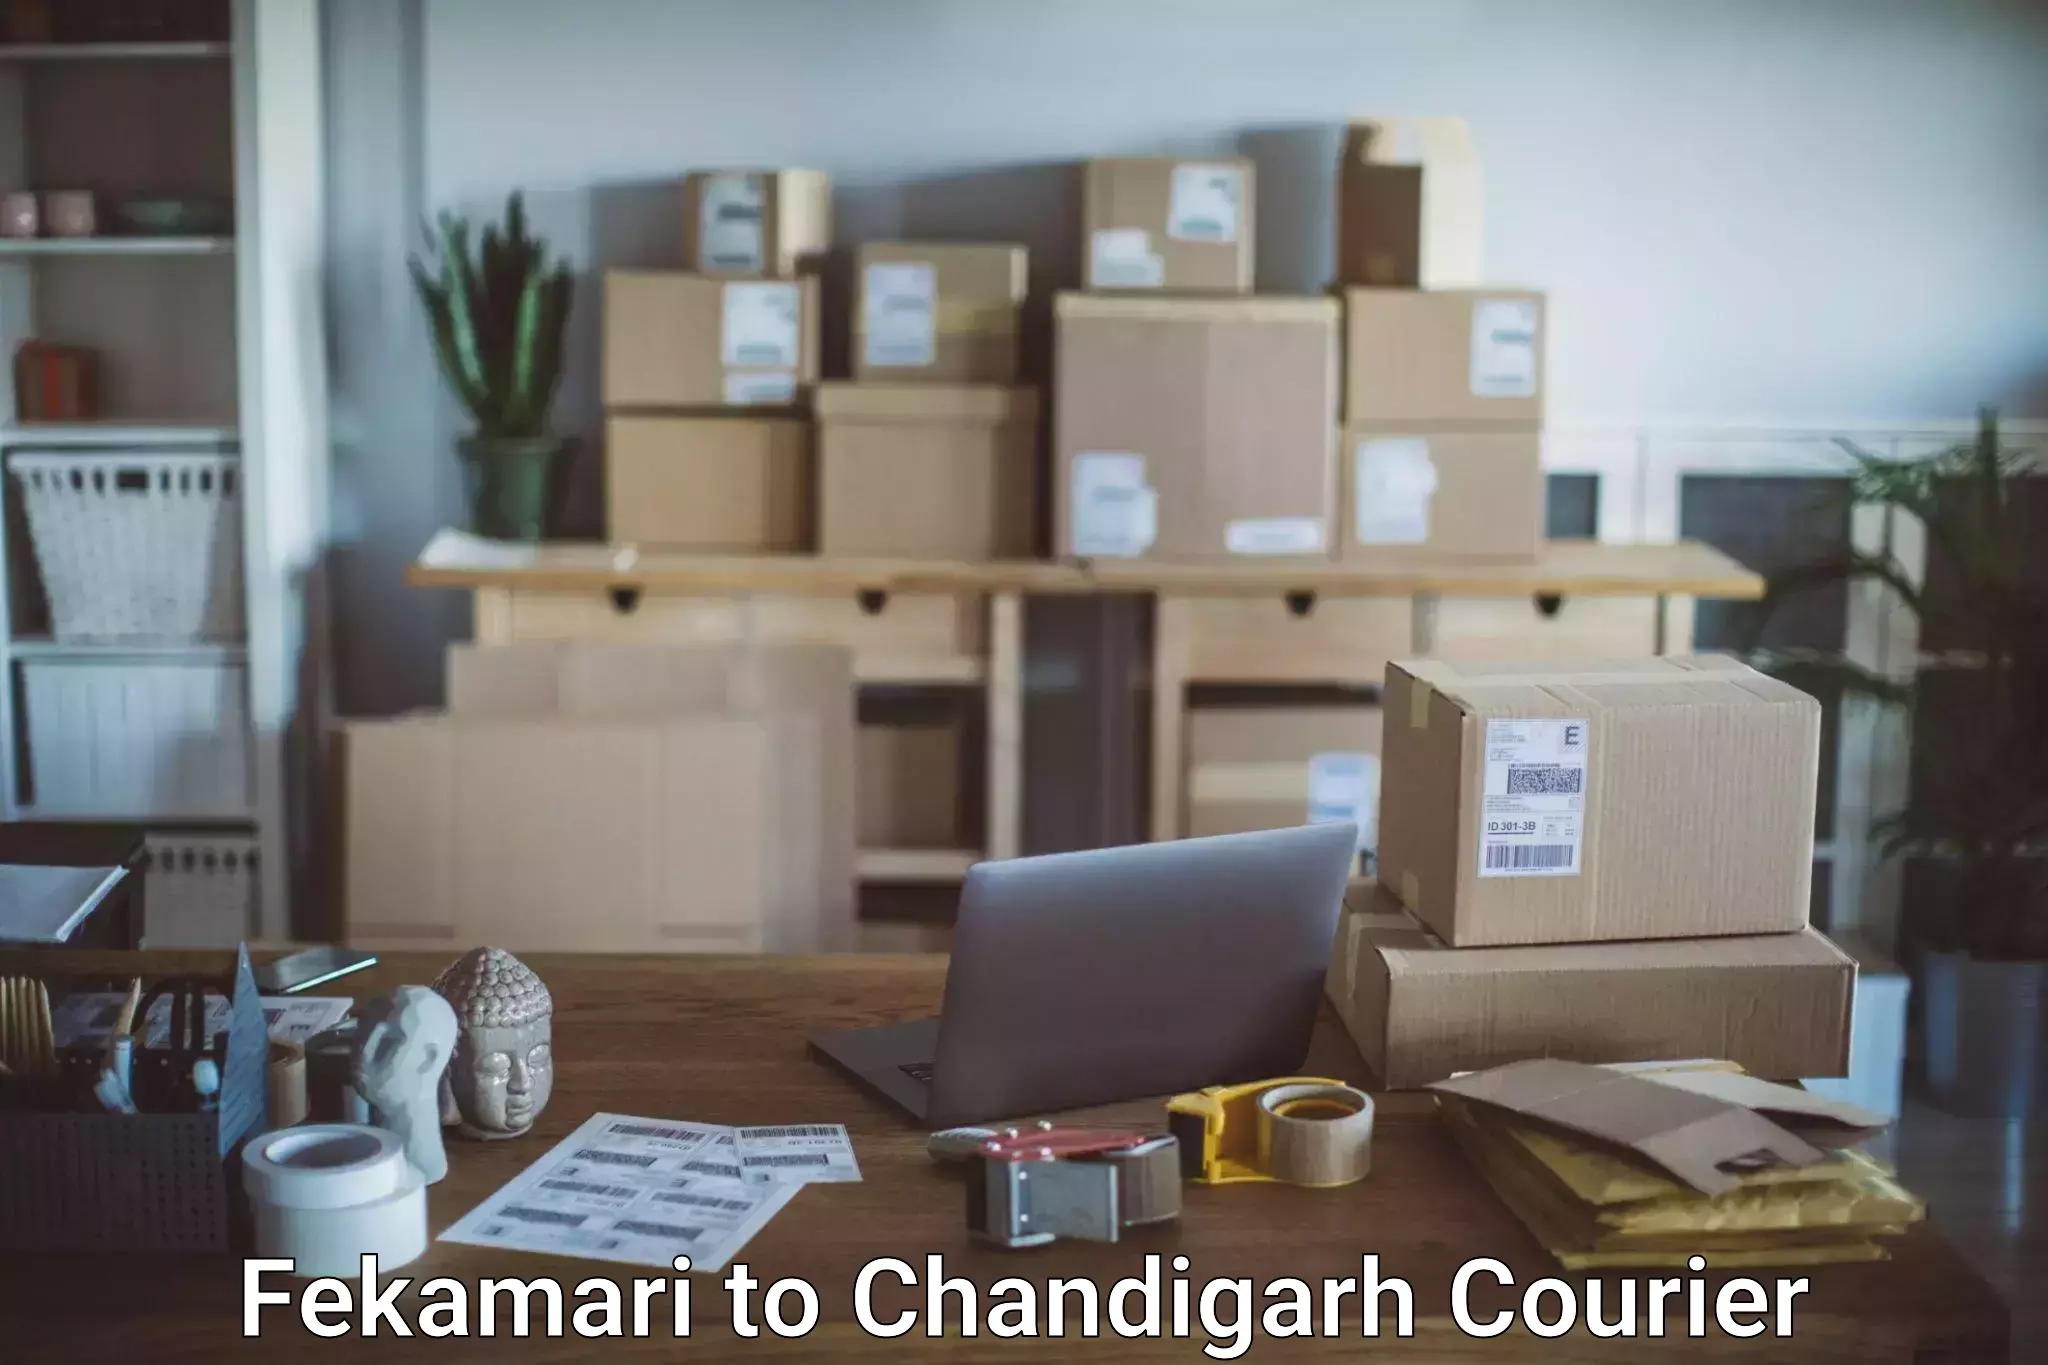 Luggage delivery network Fekamari to Chandigarh